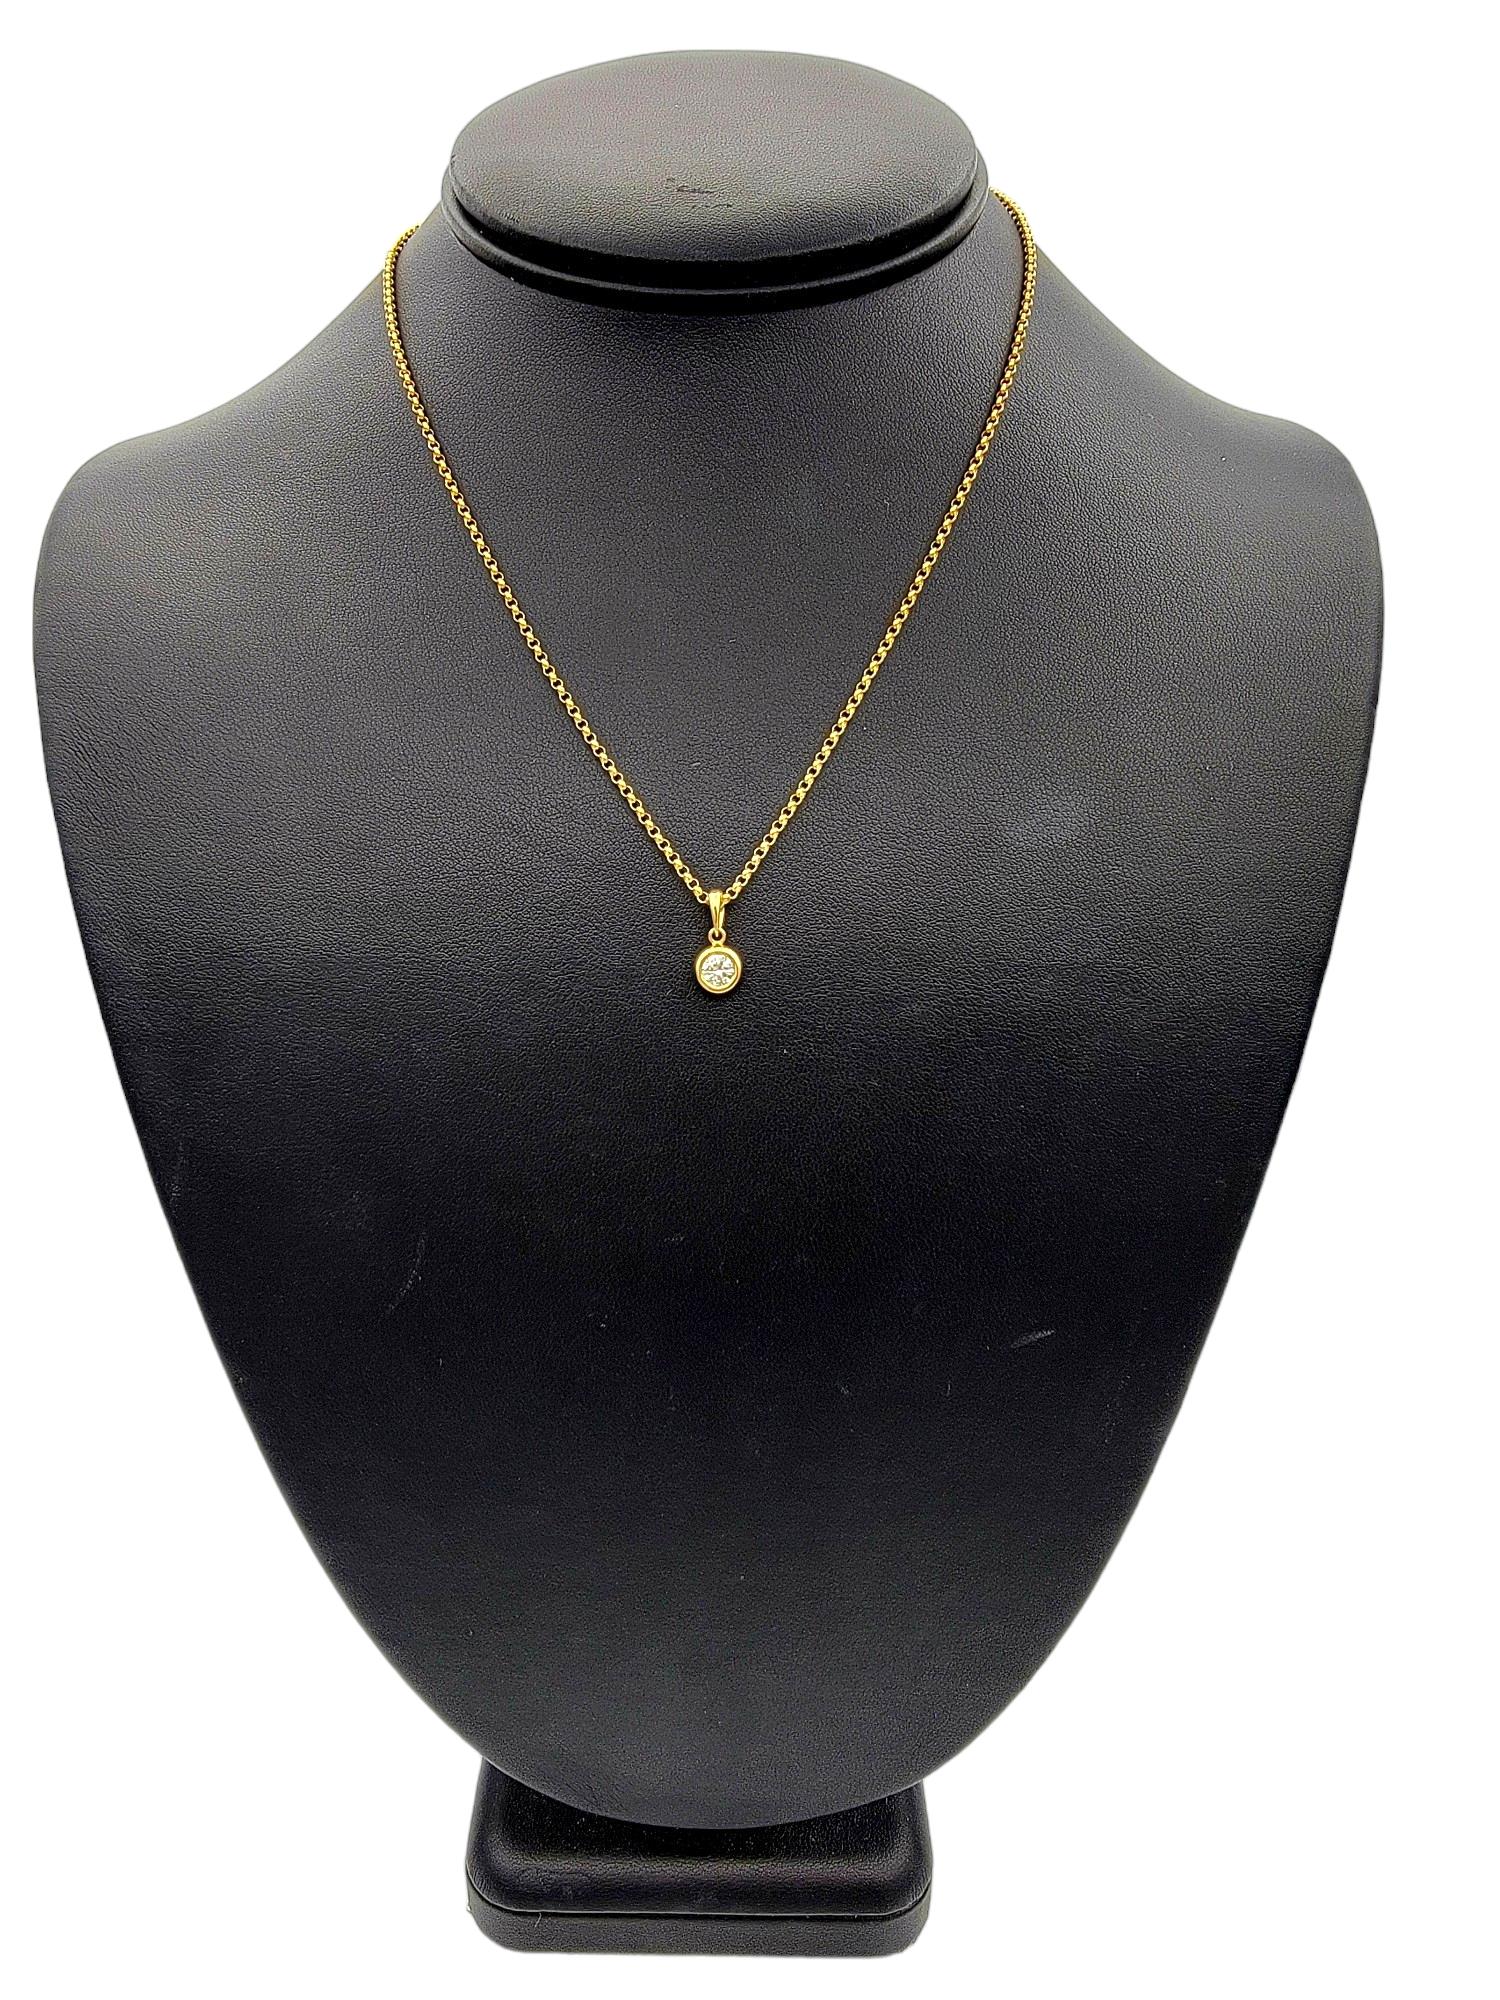 .34 Carat Bezel-Set Round Diamond Solitaire Pendant Necklace in 18 Karat Gold For Sale 4